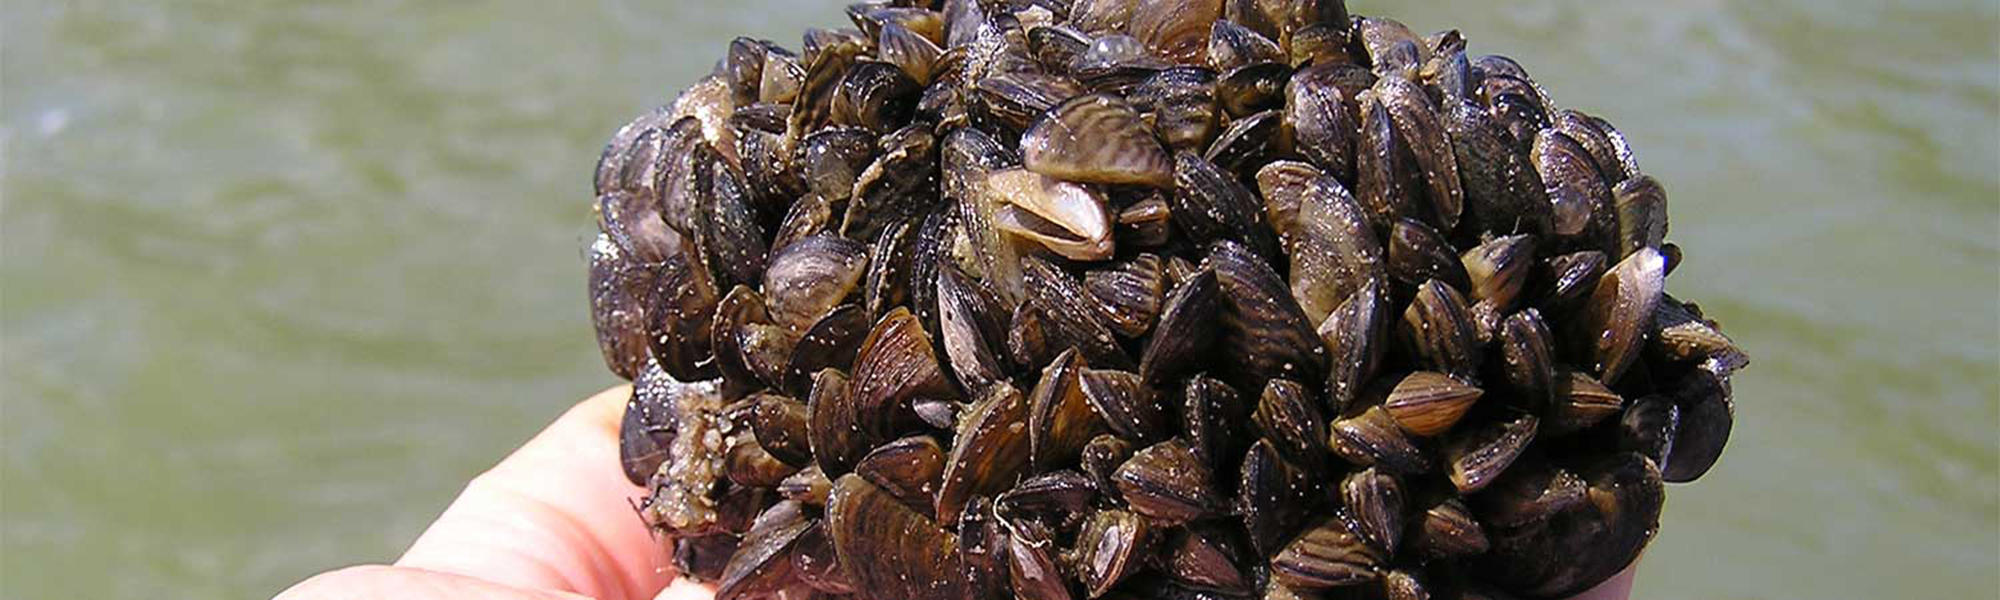 zebra mussels on fish